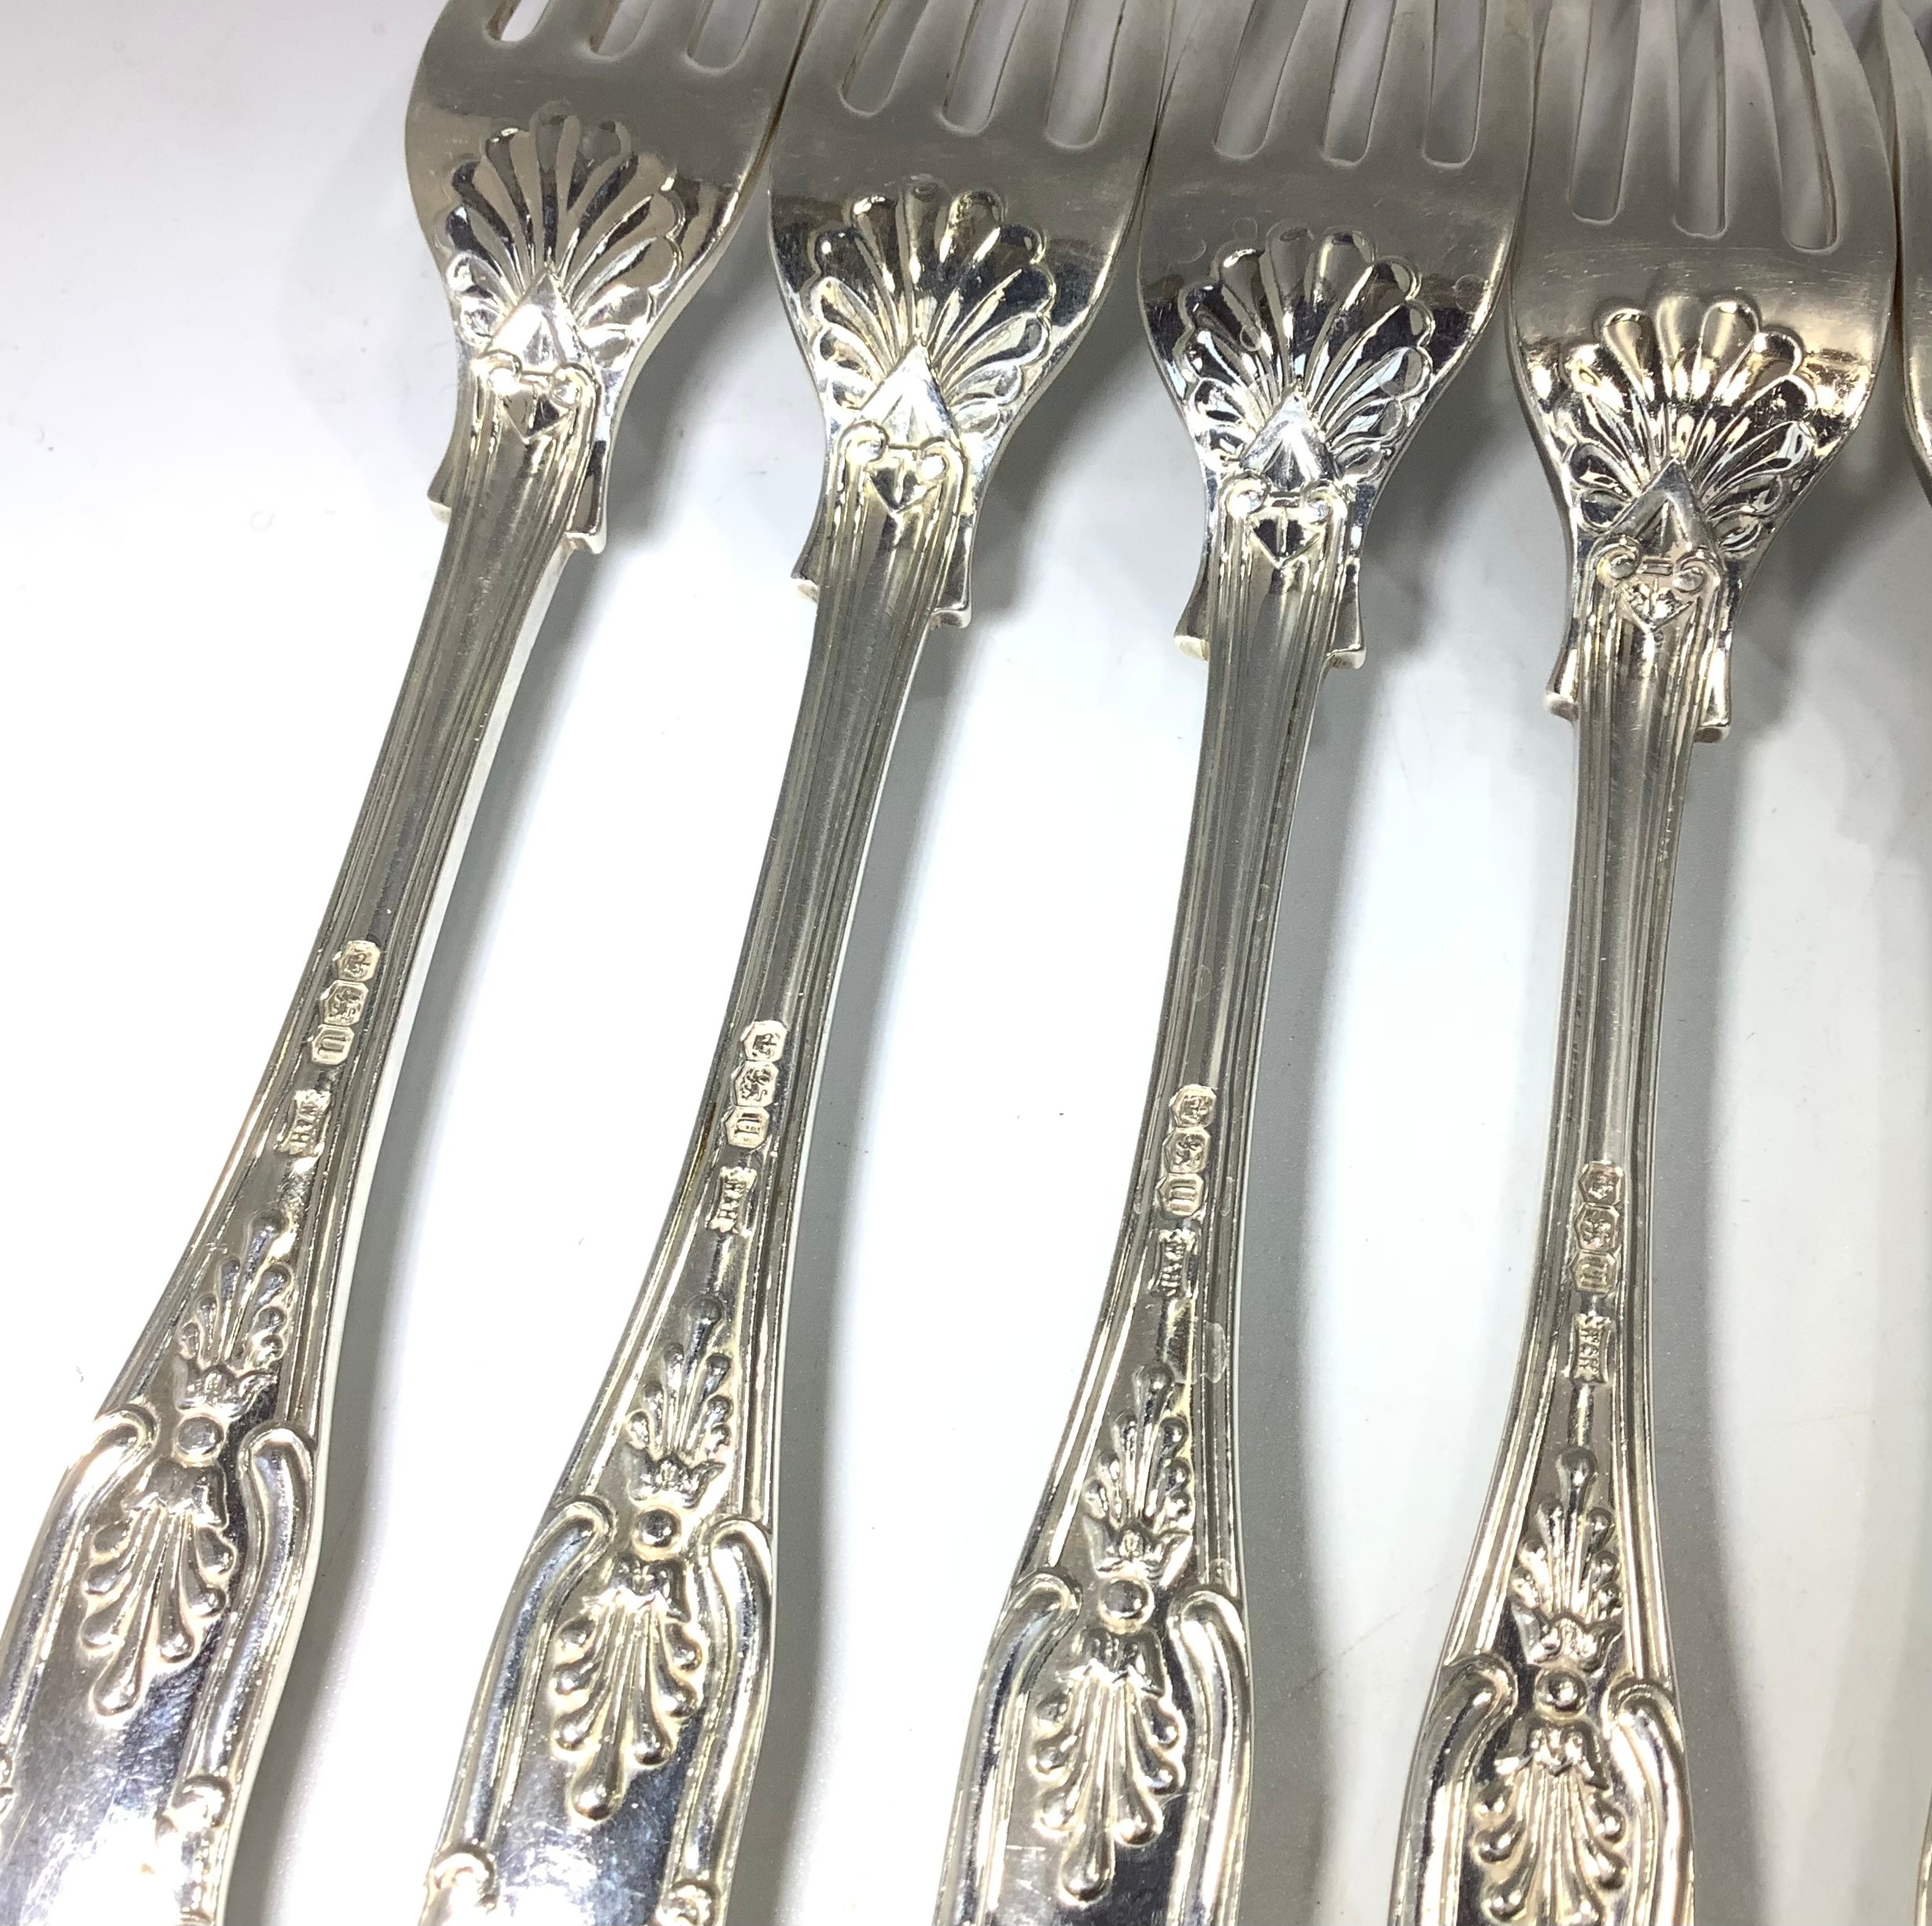 Six silver Queens pattern forks, Sheffield, 1937, maker's mark of Walker & Hall, 12.17 ozt - Image 2 of 2